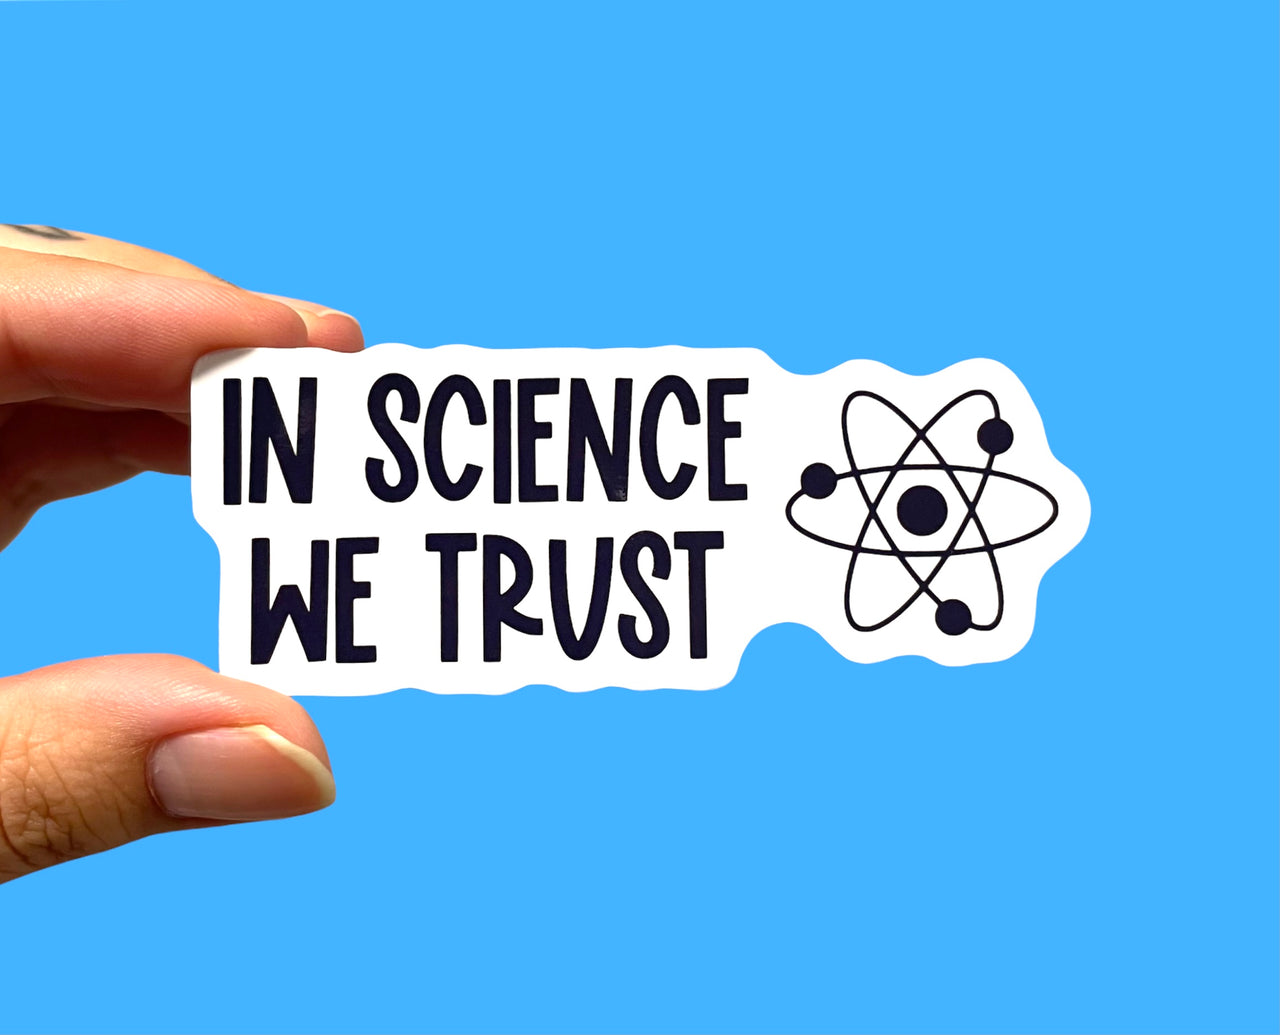 In science we trust